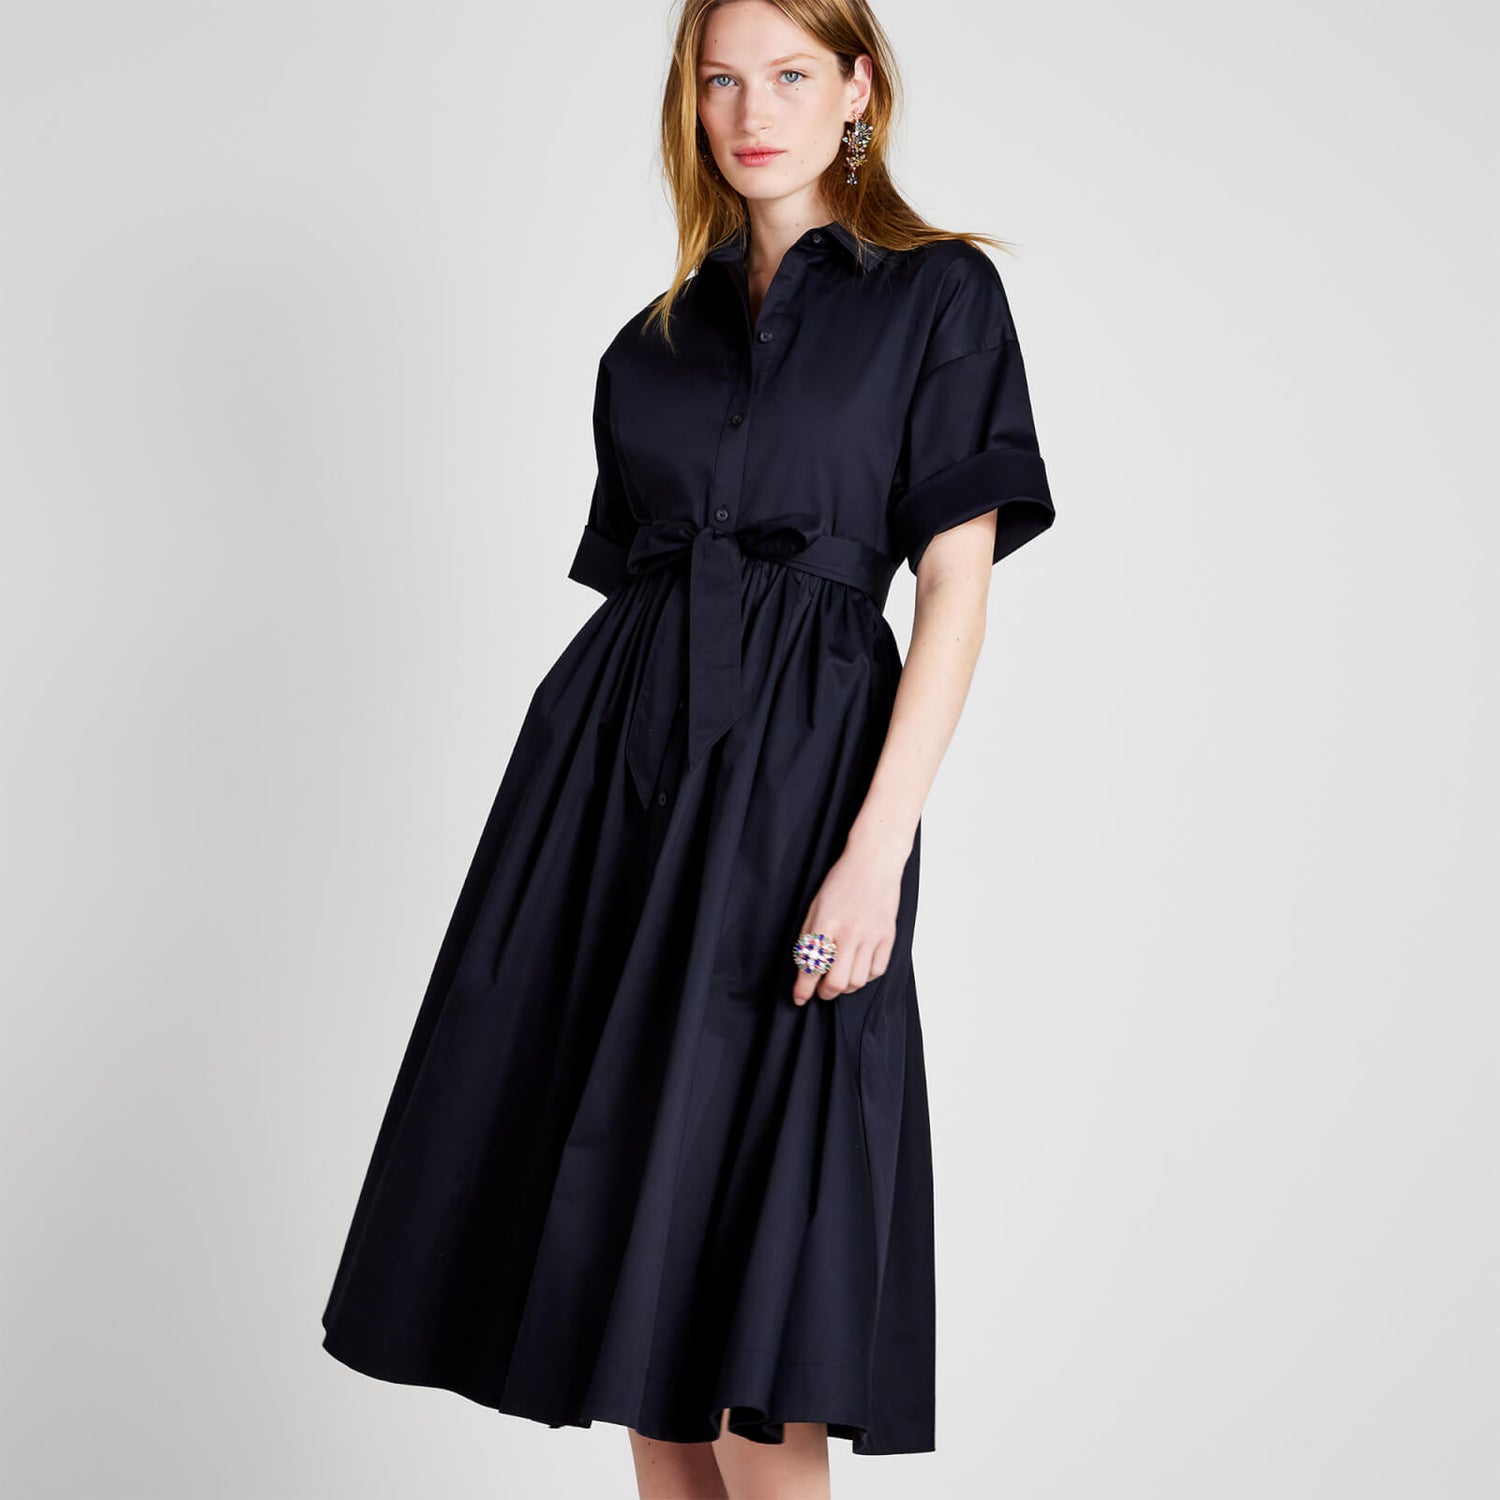 Kate Spade New York Women's Poplin Montauk Dress - Black - S